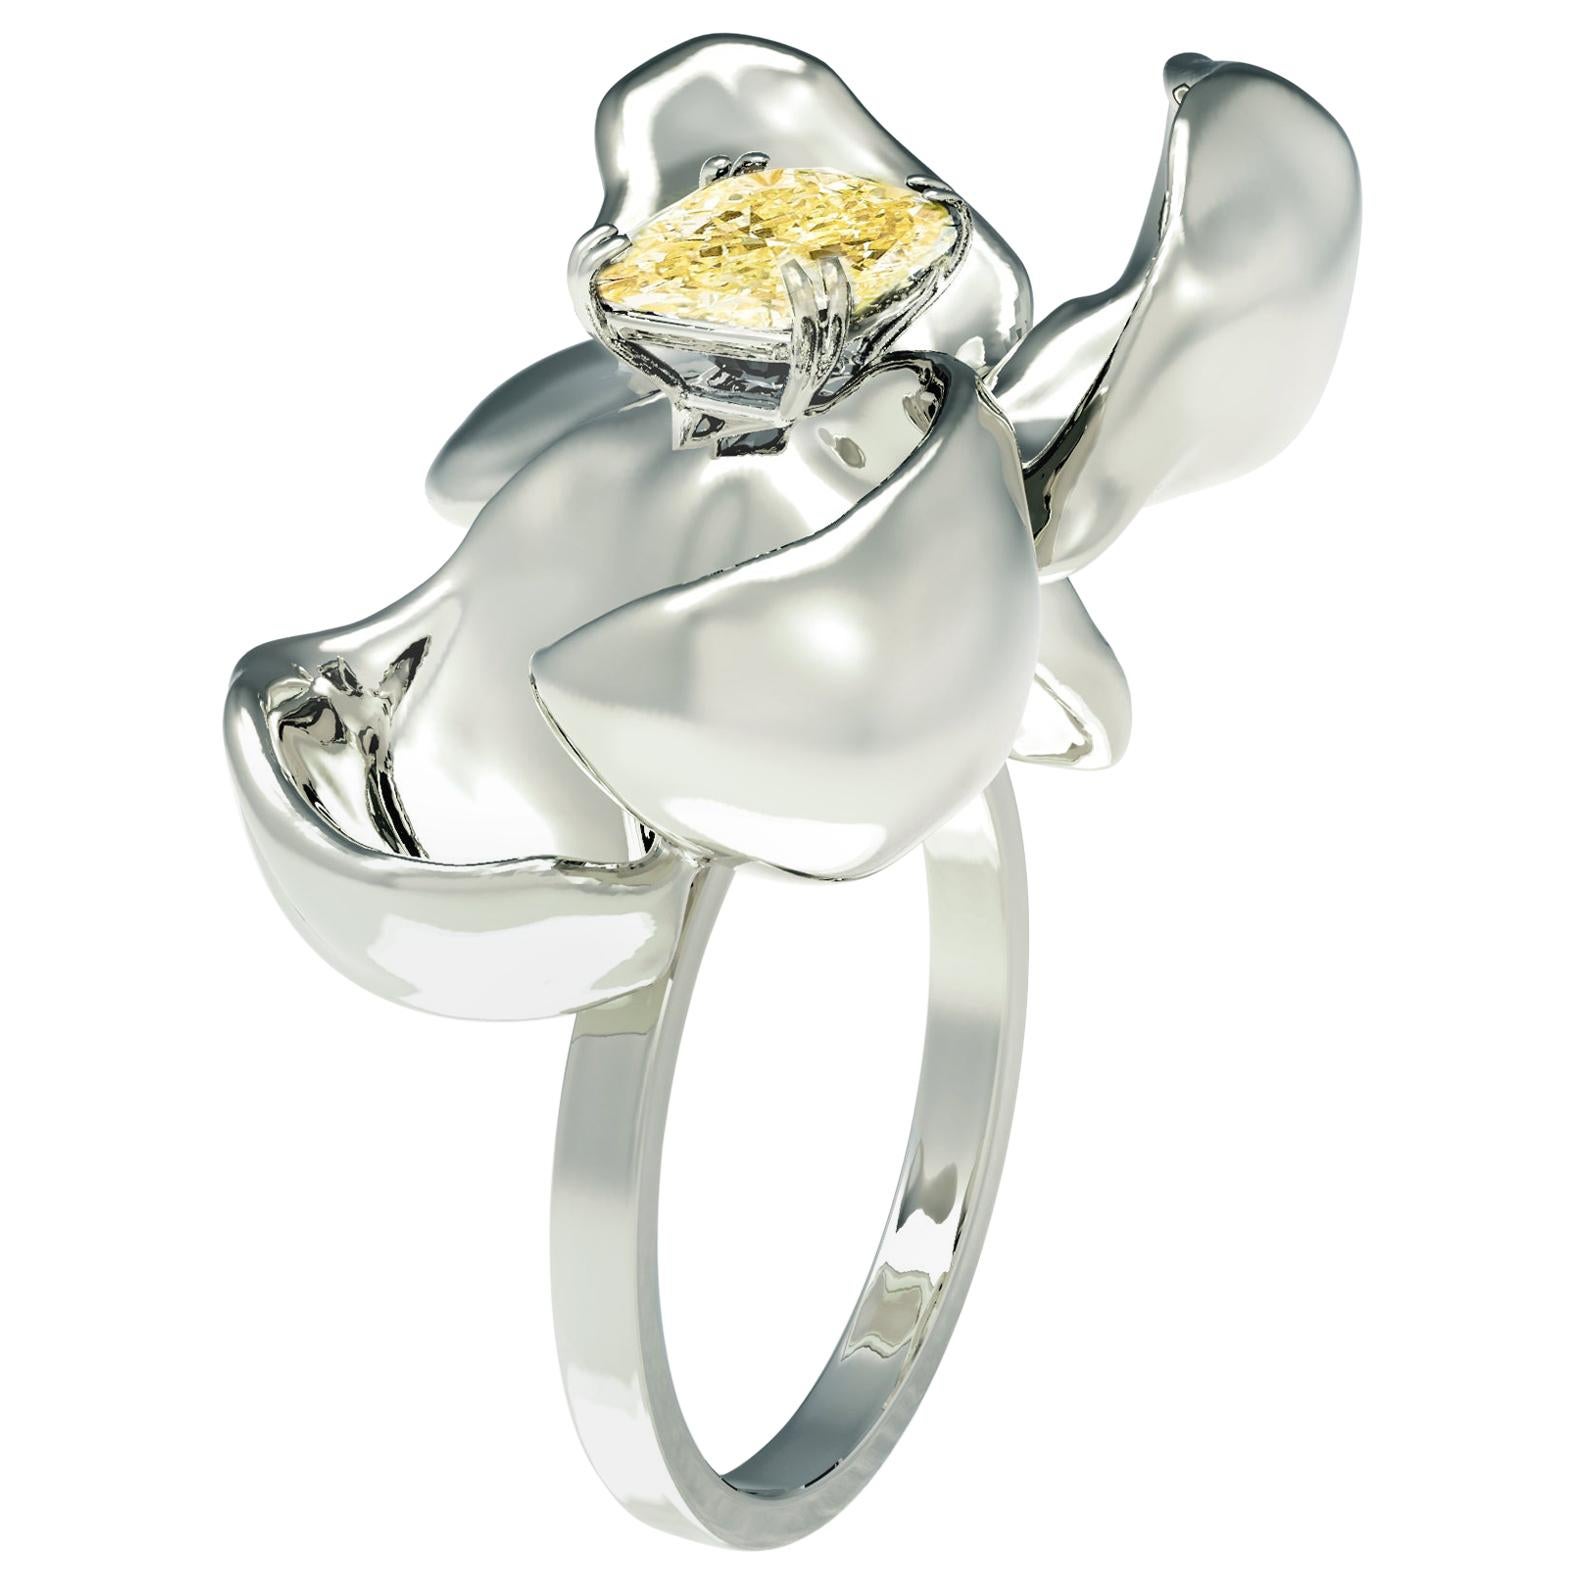 Eighteen Karat White Gold Engagement Ring with GIA Fancy Light Yellow Diamond